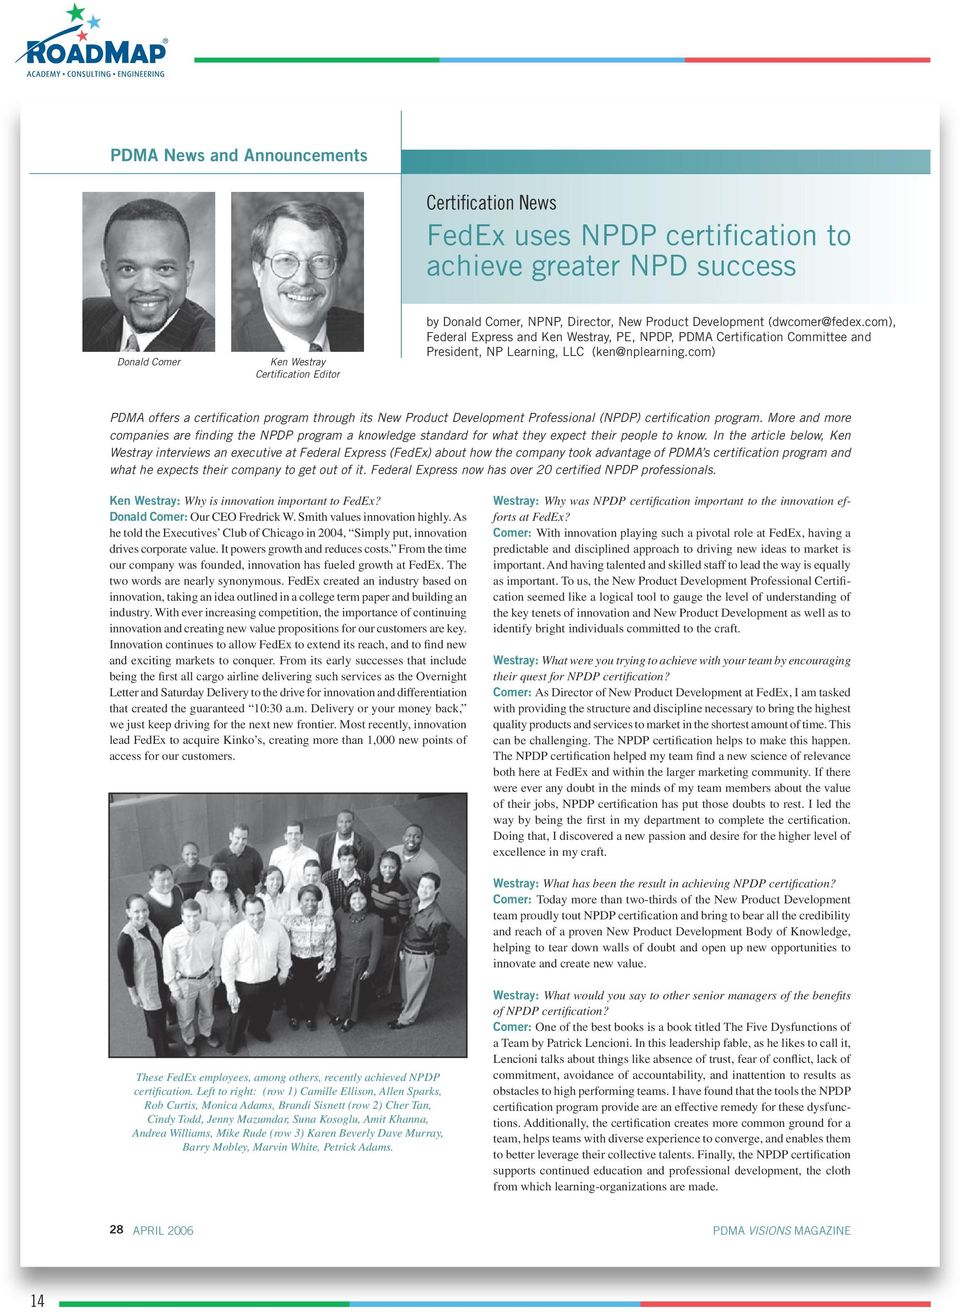 com) PDMA offers a certification program through its New Product Development Professional (NPDP) certification program.